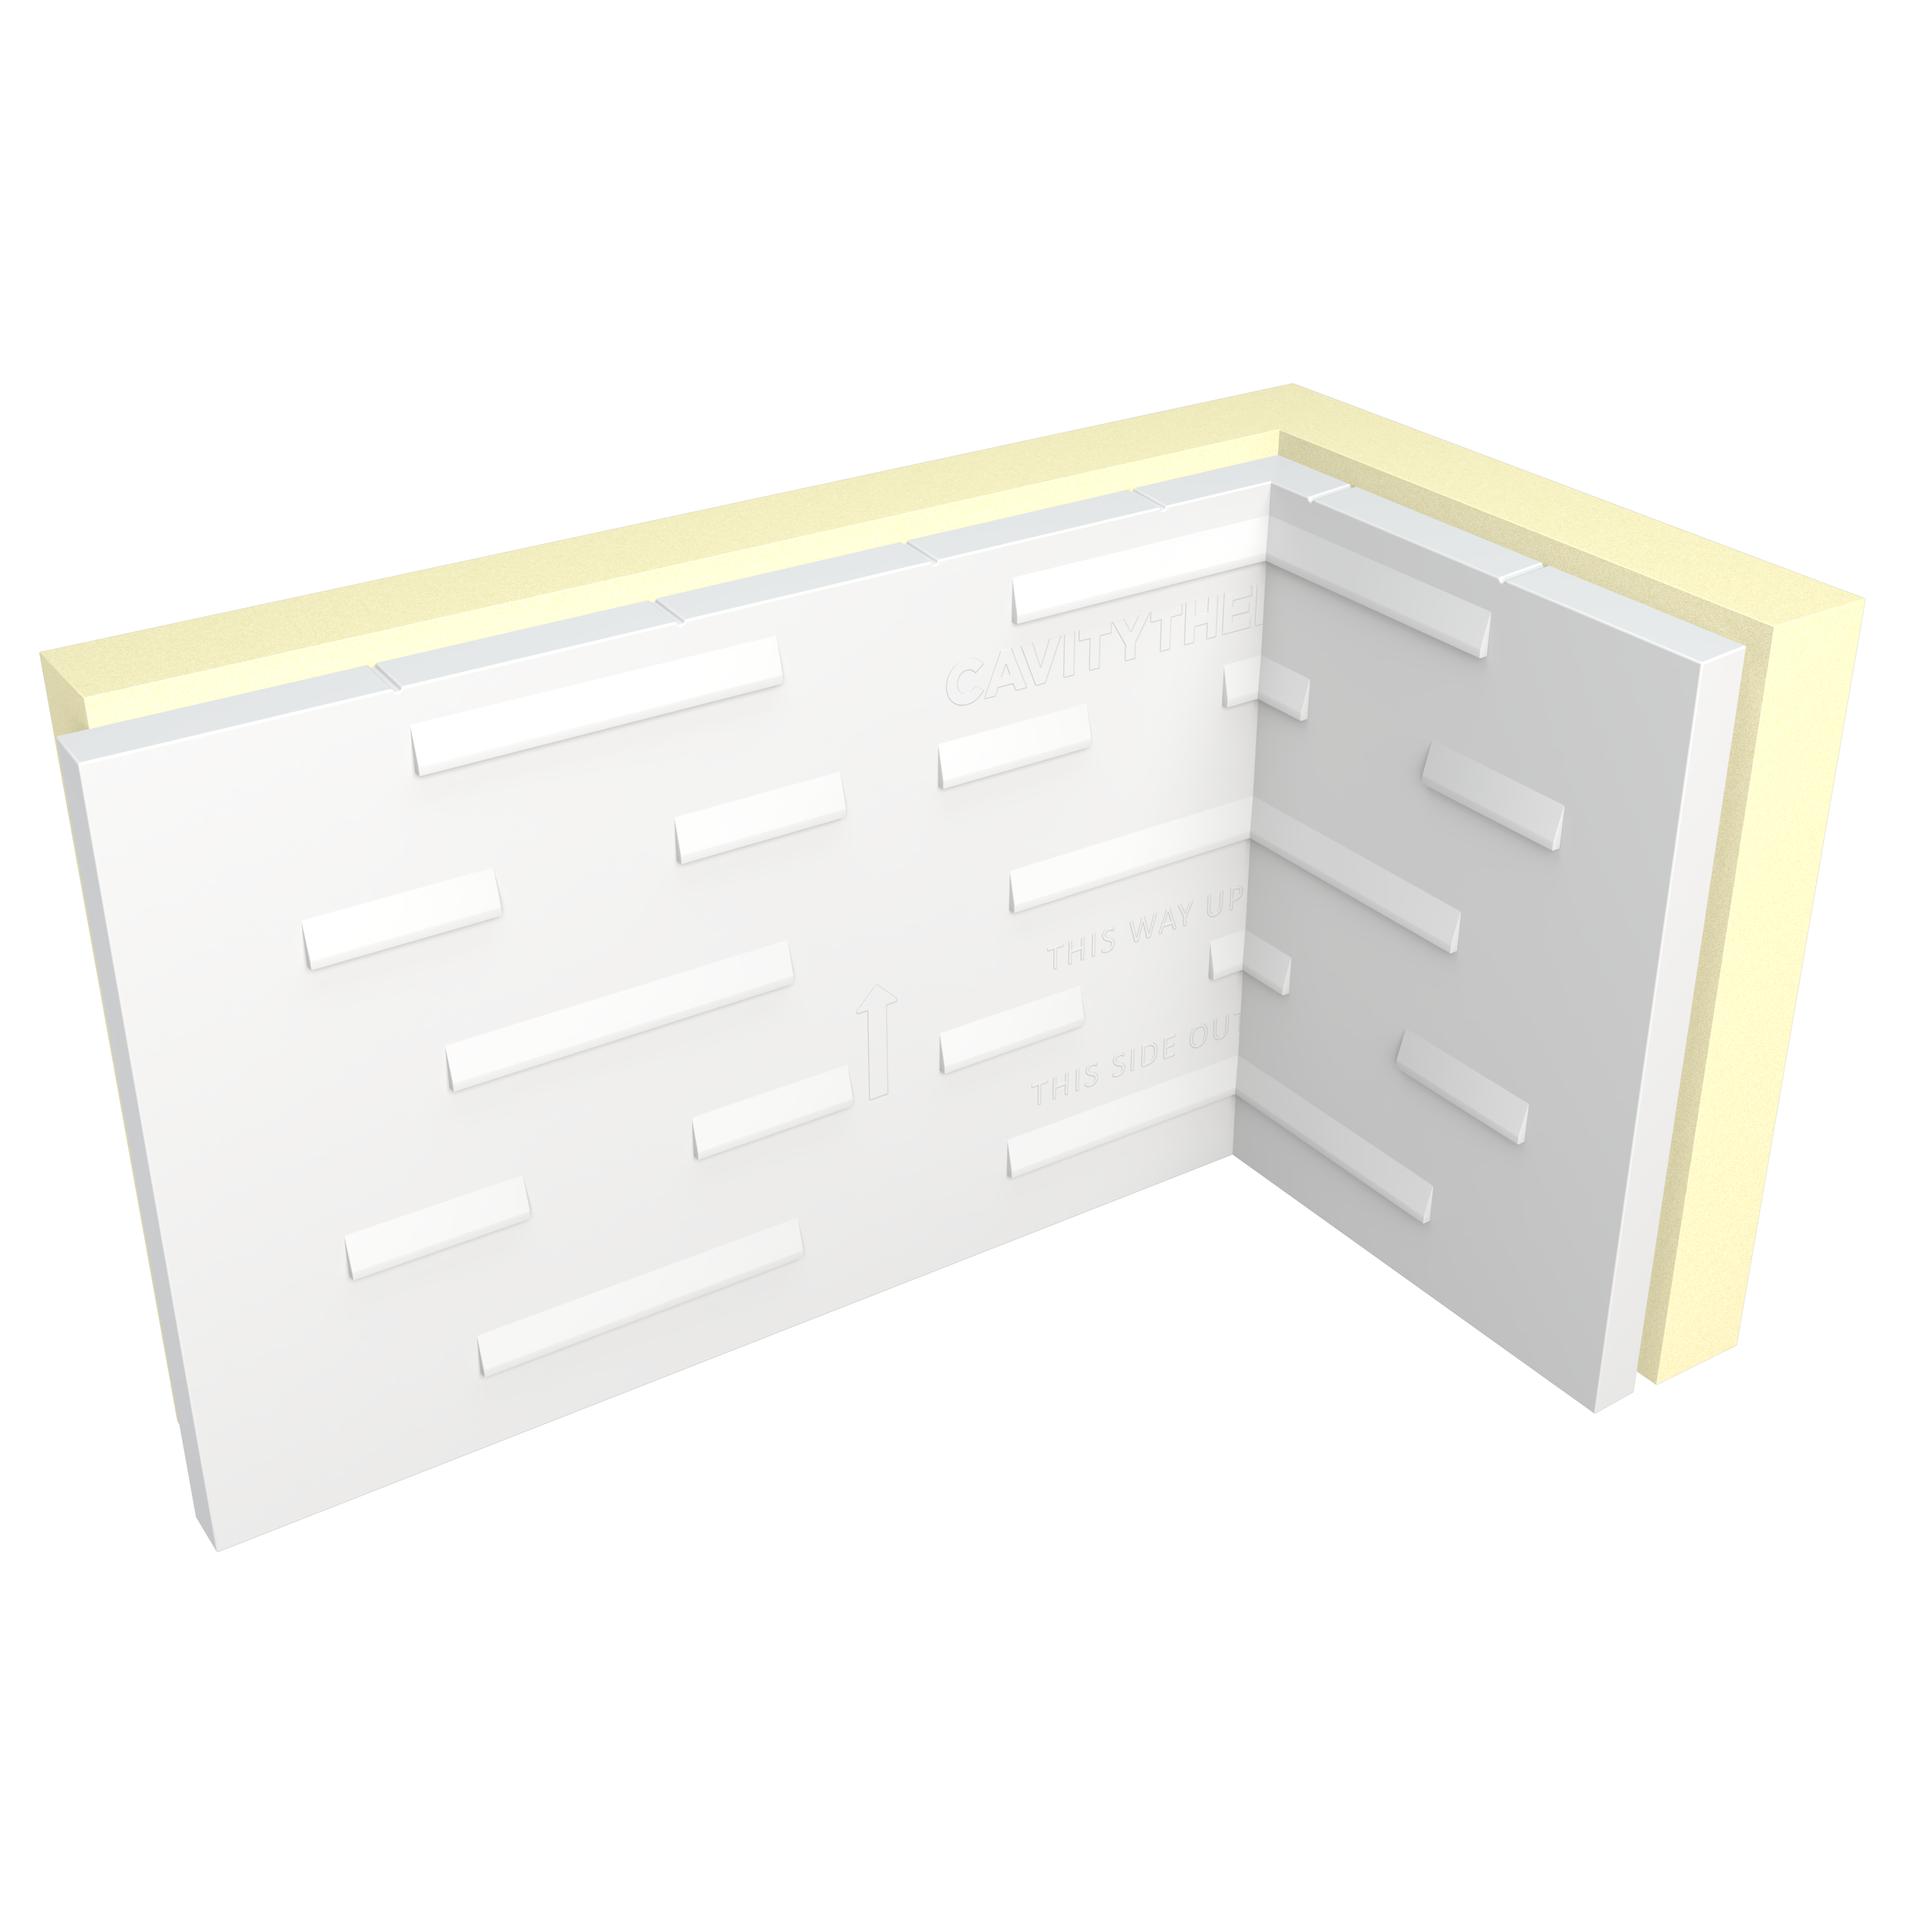 Unilin Insulation cavity therm insulation board with interior corner